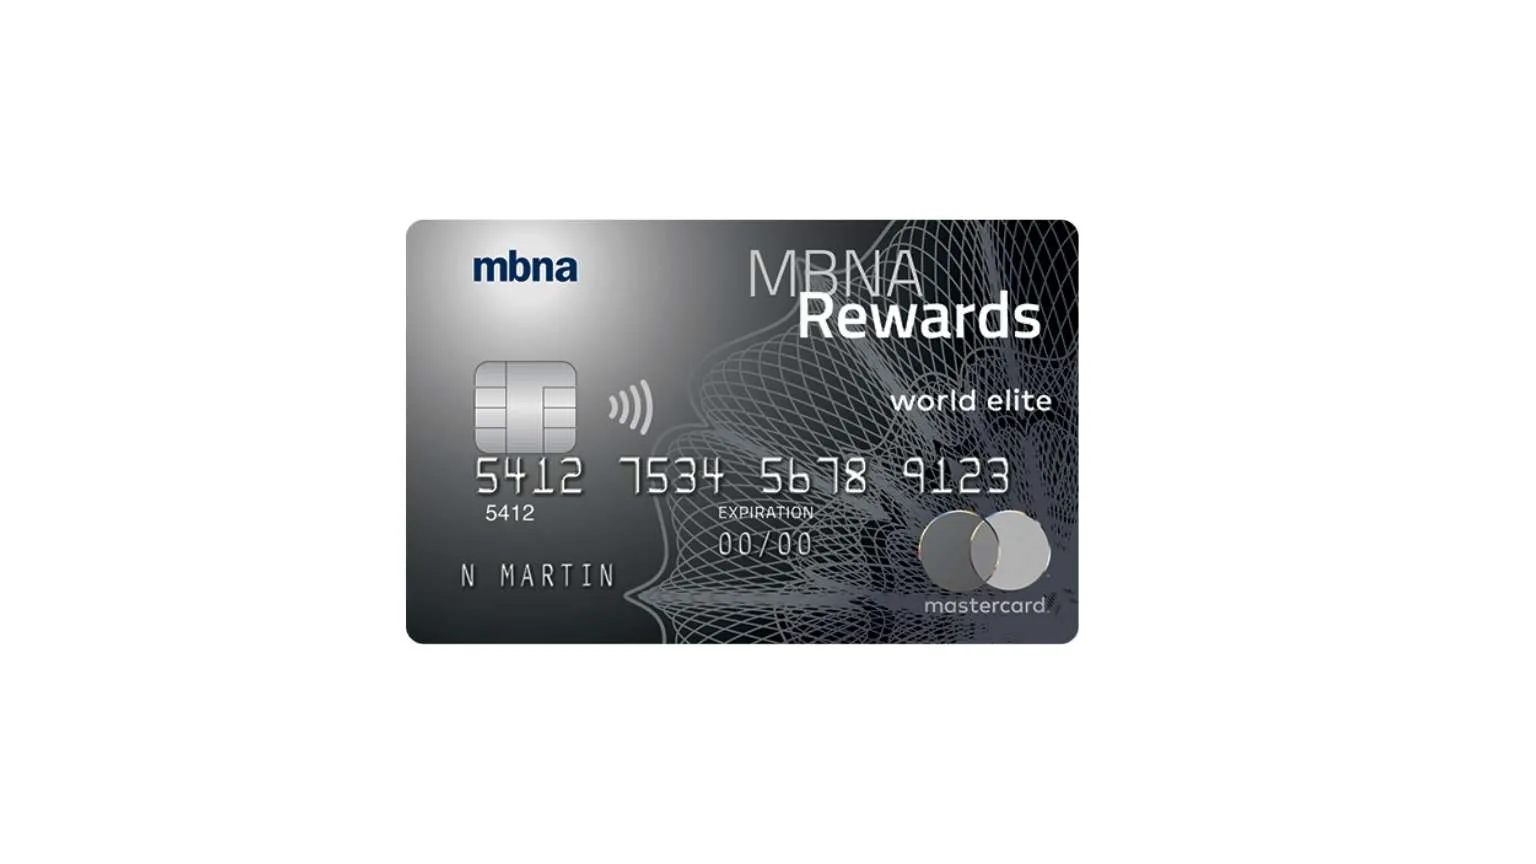 mbna rewards world elite travel insurance